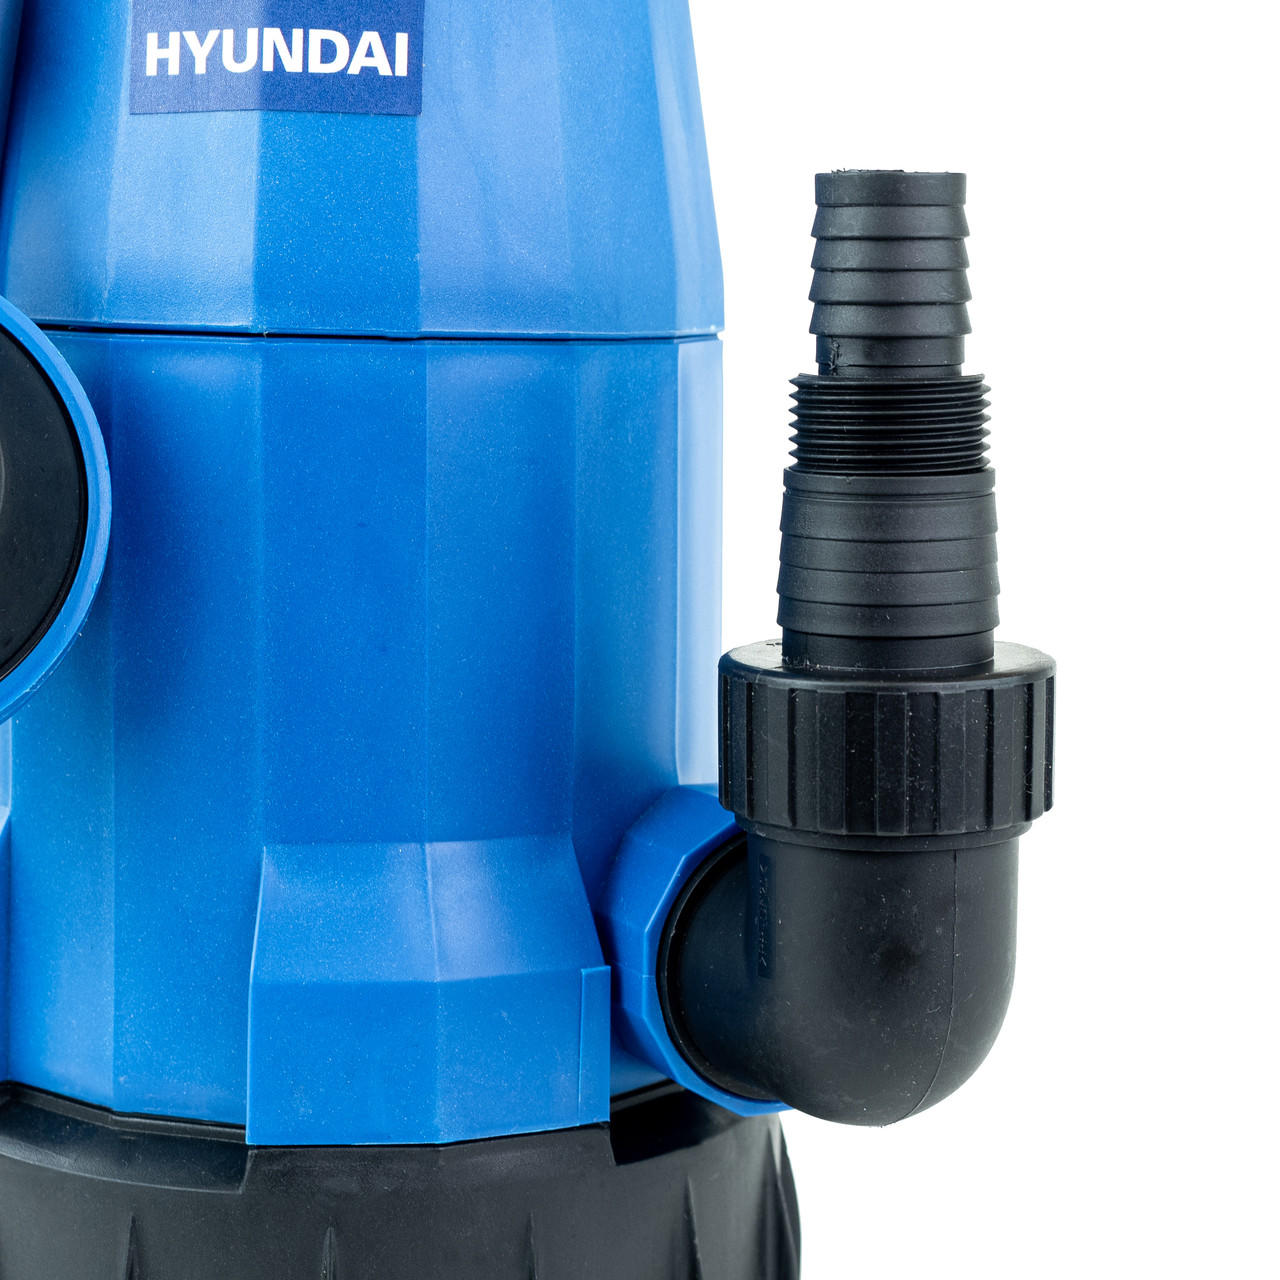 Hyundai HYSP1100CD Electric Submersible Water Pump - 1100W